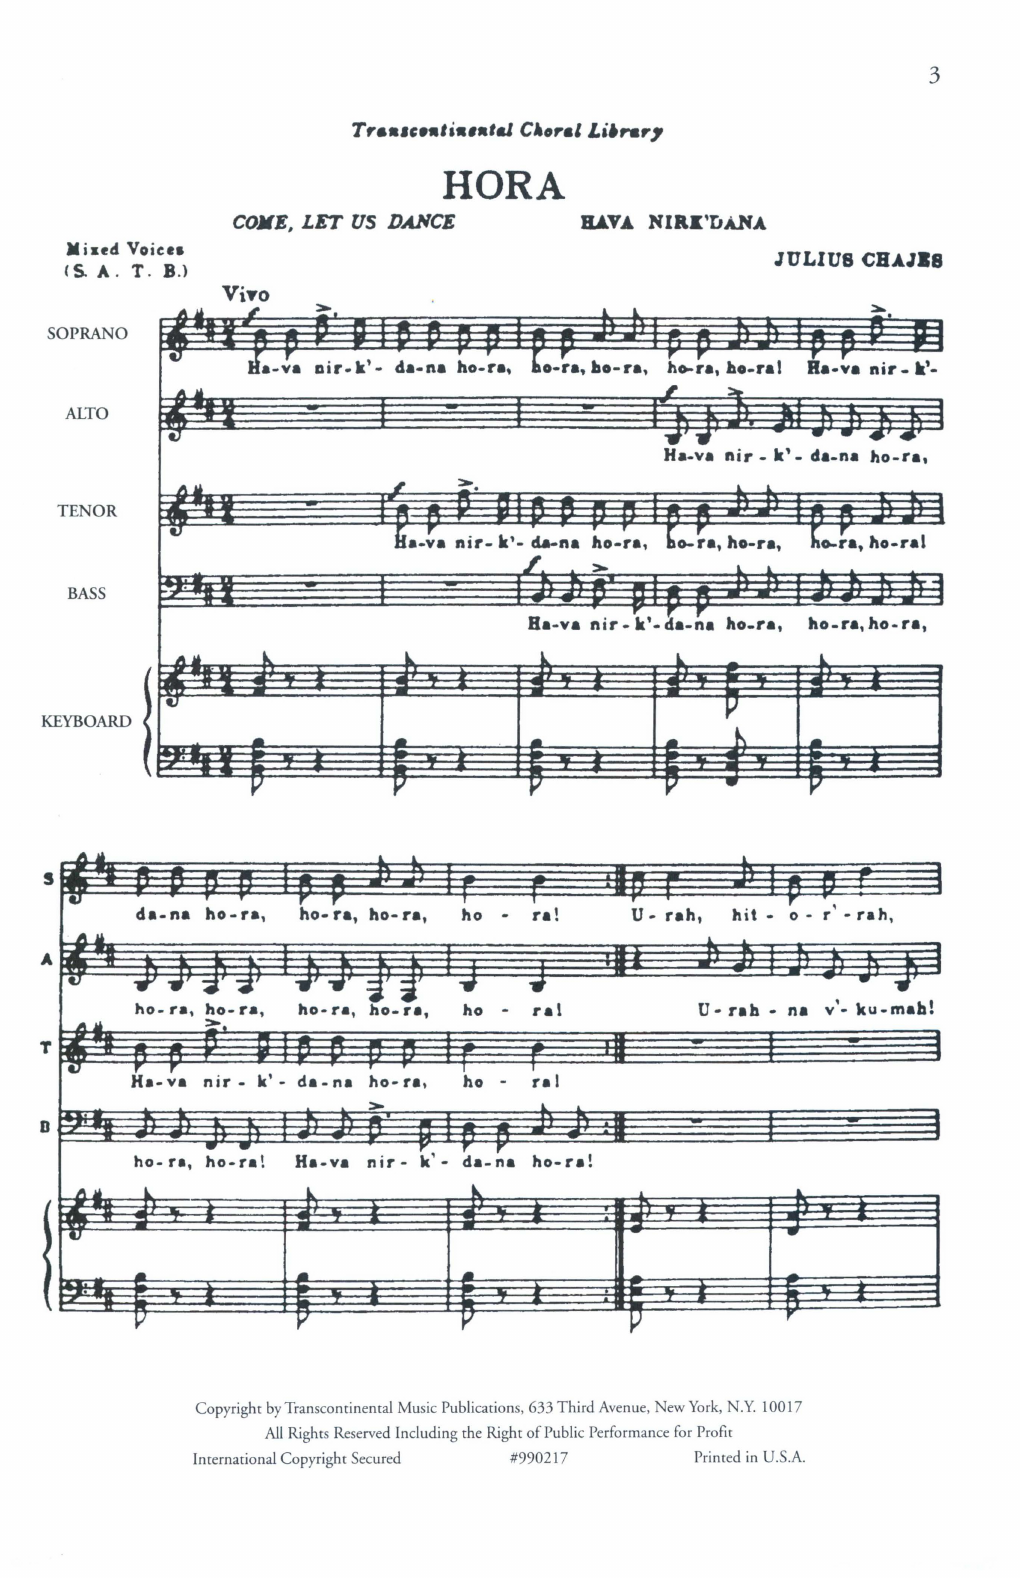 Julius Chajes Hora (Come Let Us Dance) Sheet Music Notes & Chords for SATB Choir - Download or Print PDF